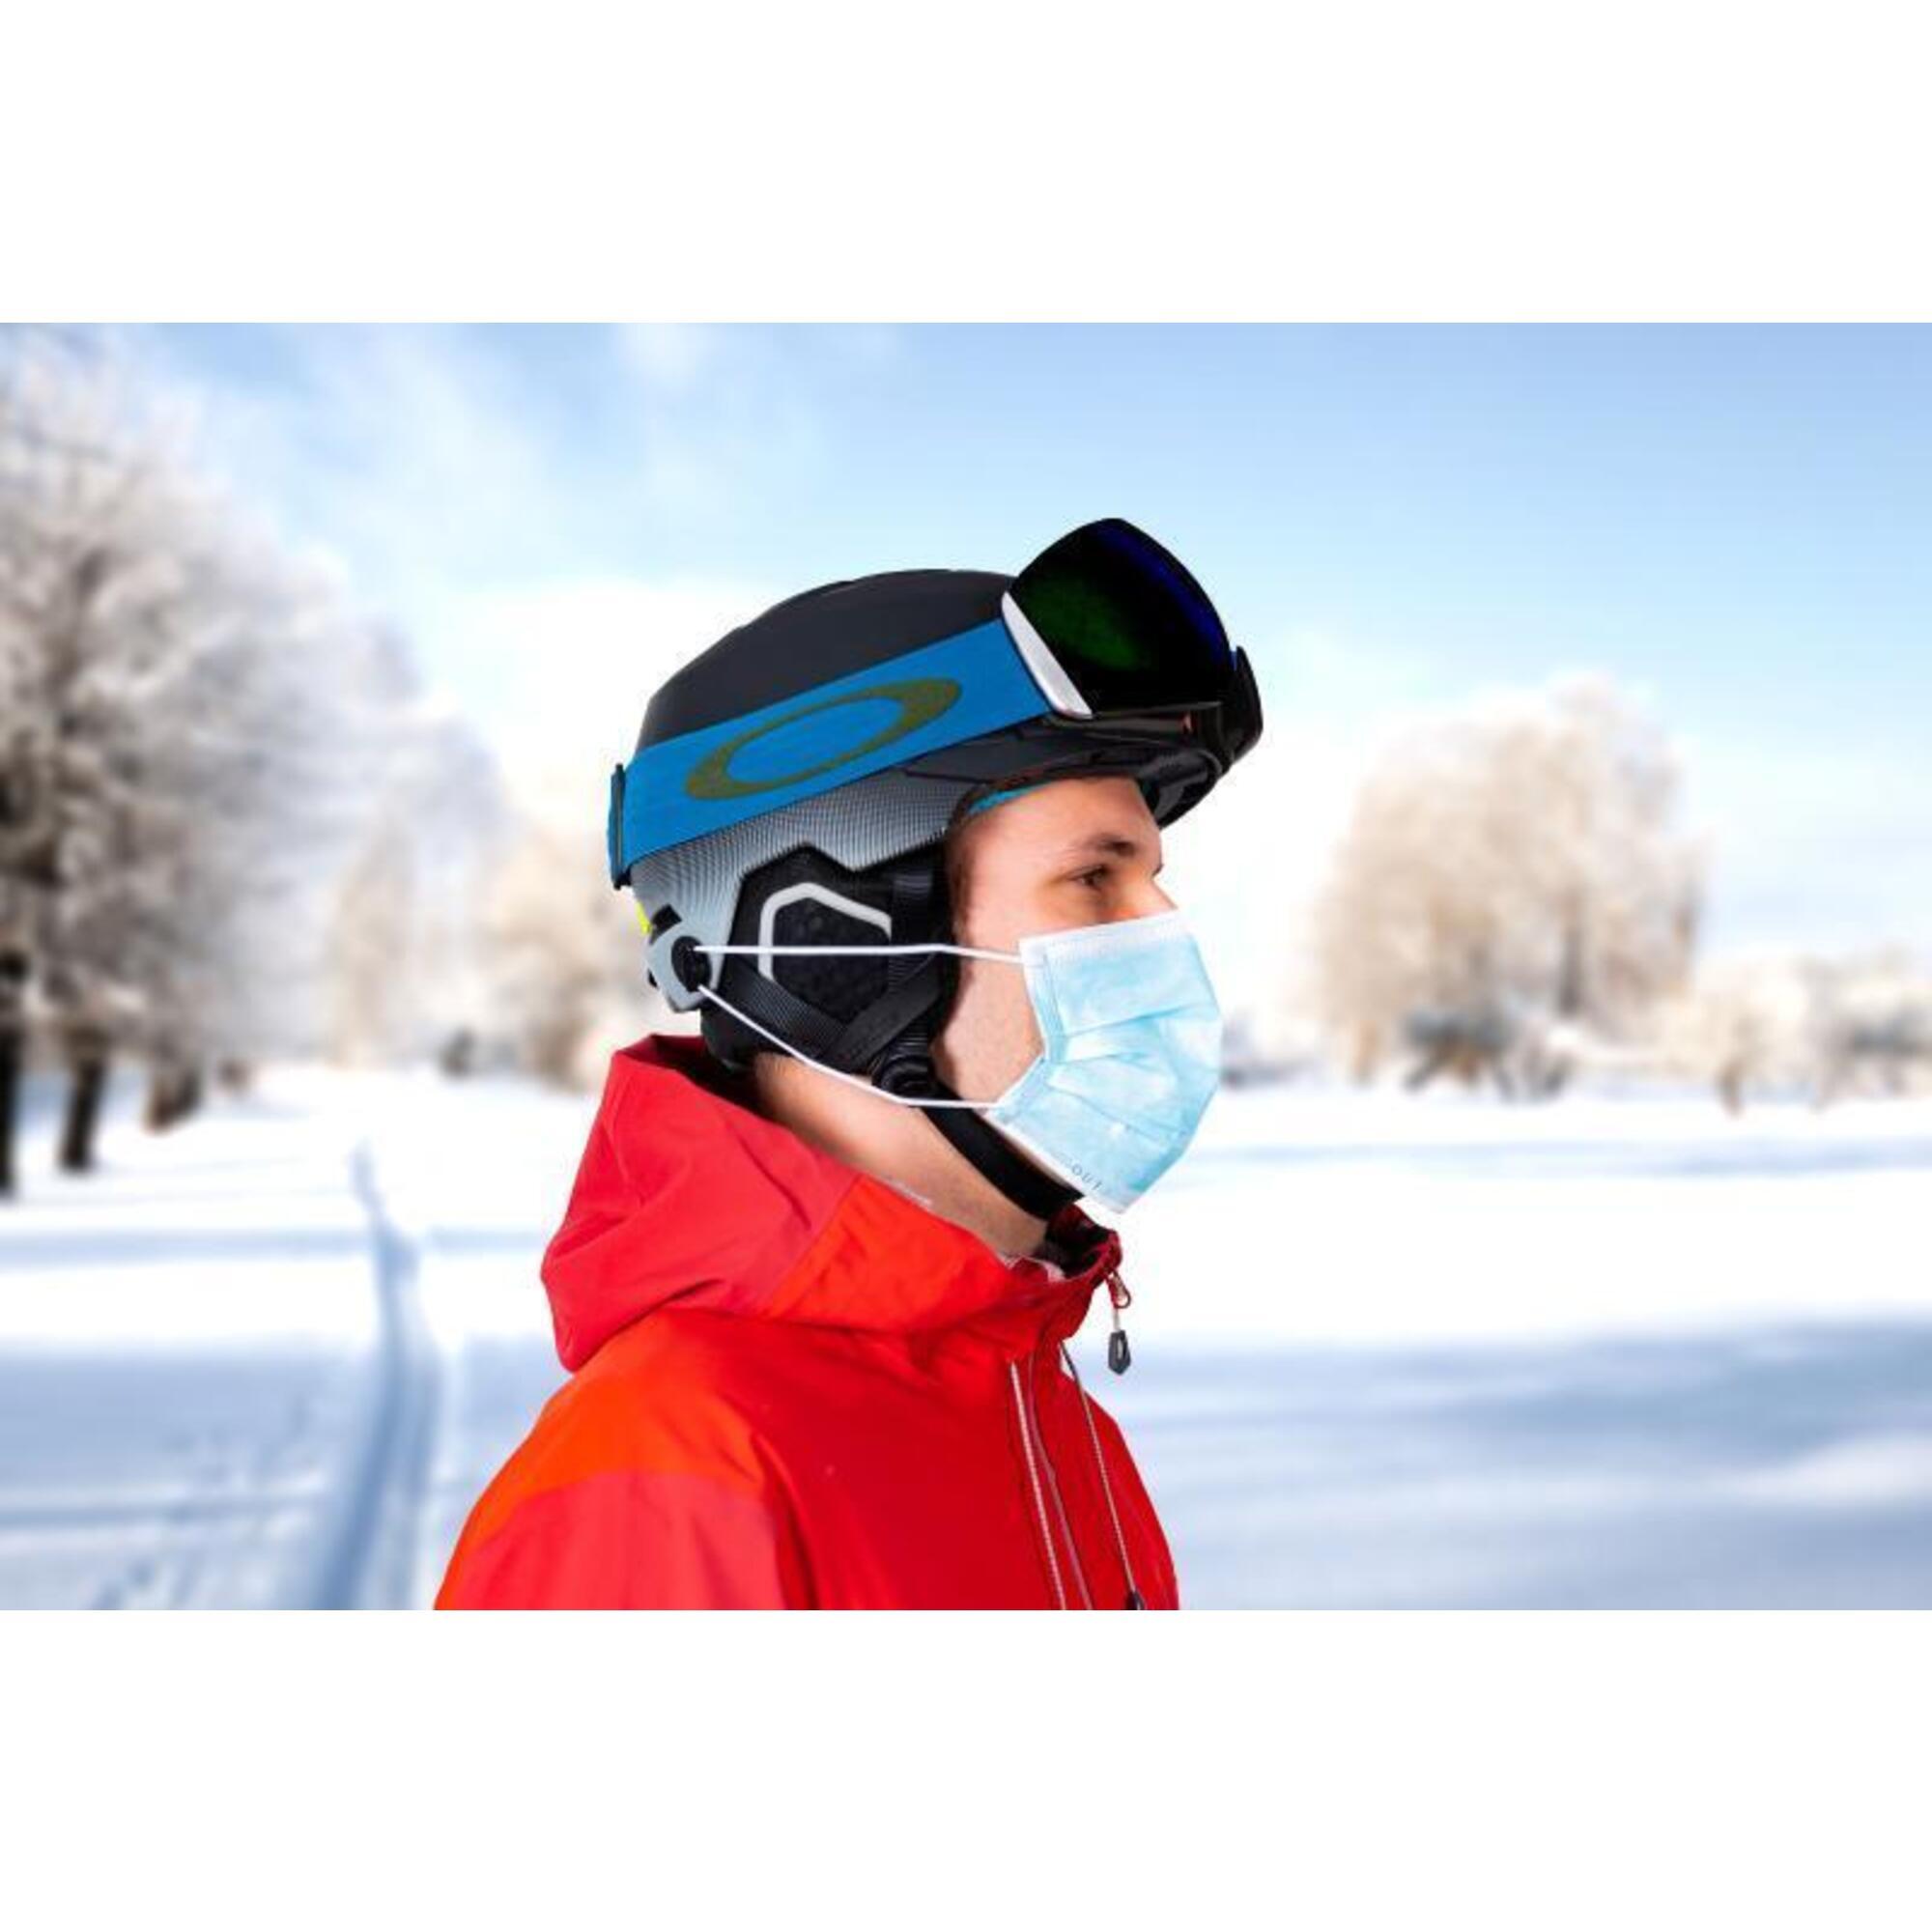 Porte-masque Covid pour casque de ski - Adulte - SKEARS1